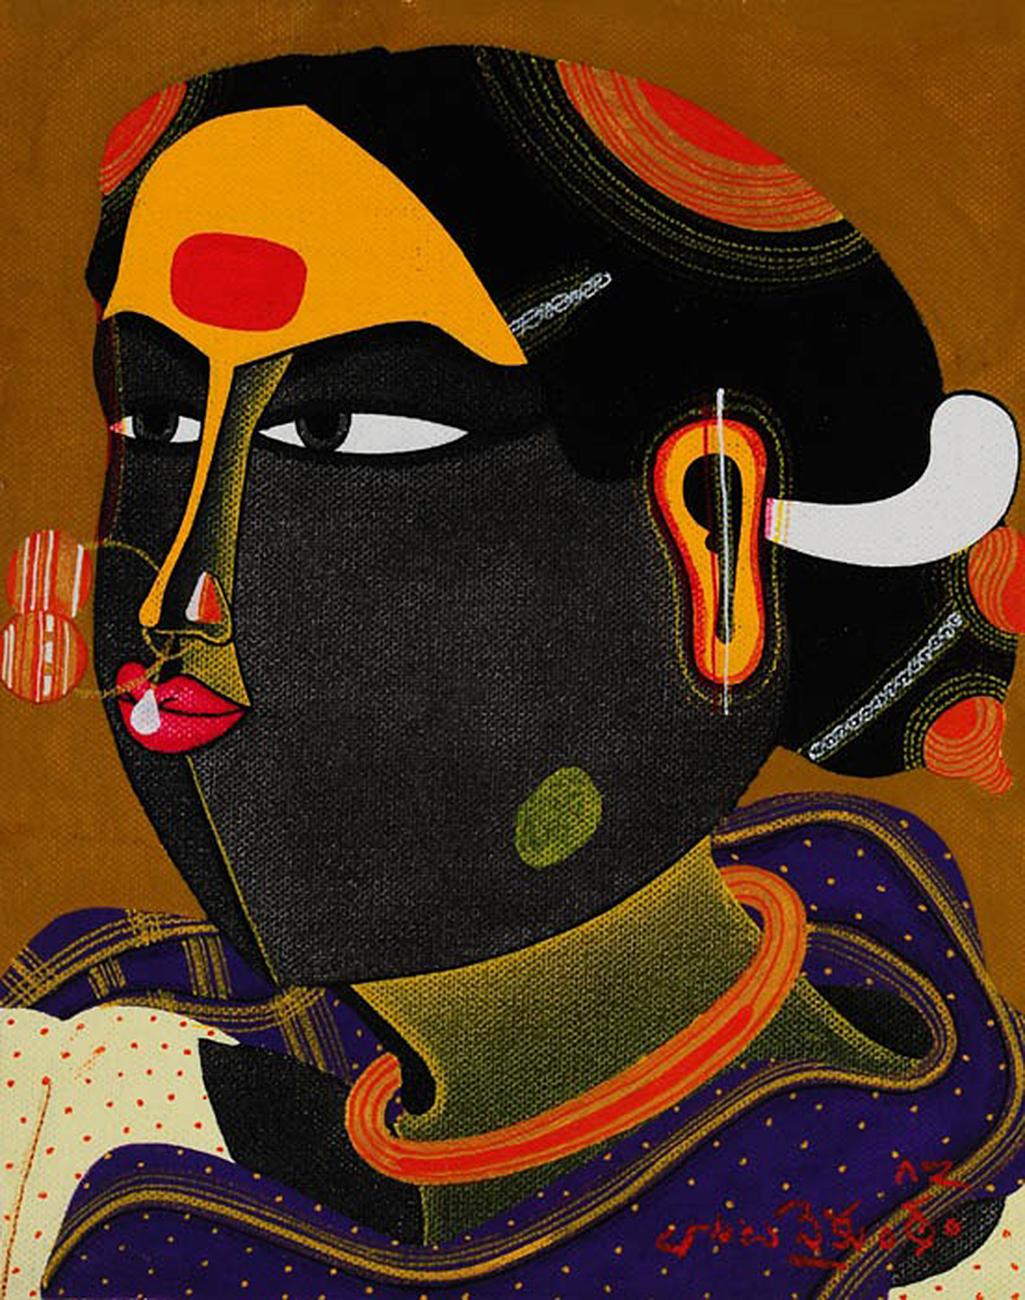 Thota Vaikuntam Figurative Painting - Telengana Woman, Acrylic on Canvas by Modern Indian Artist “In Stock”